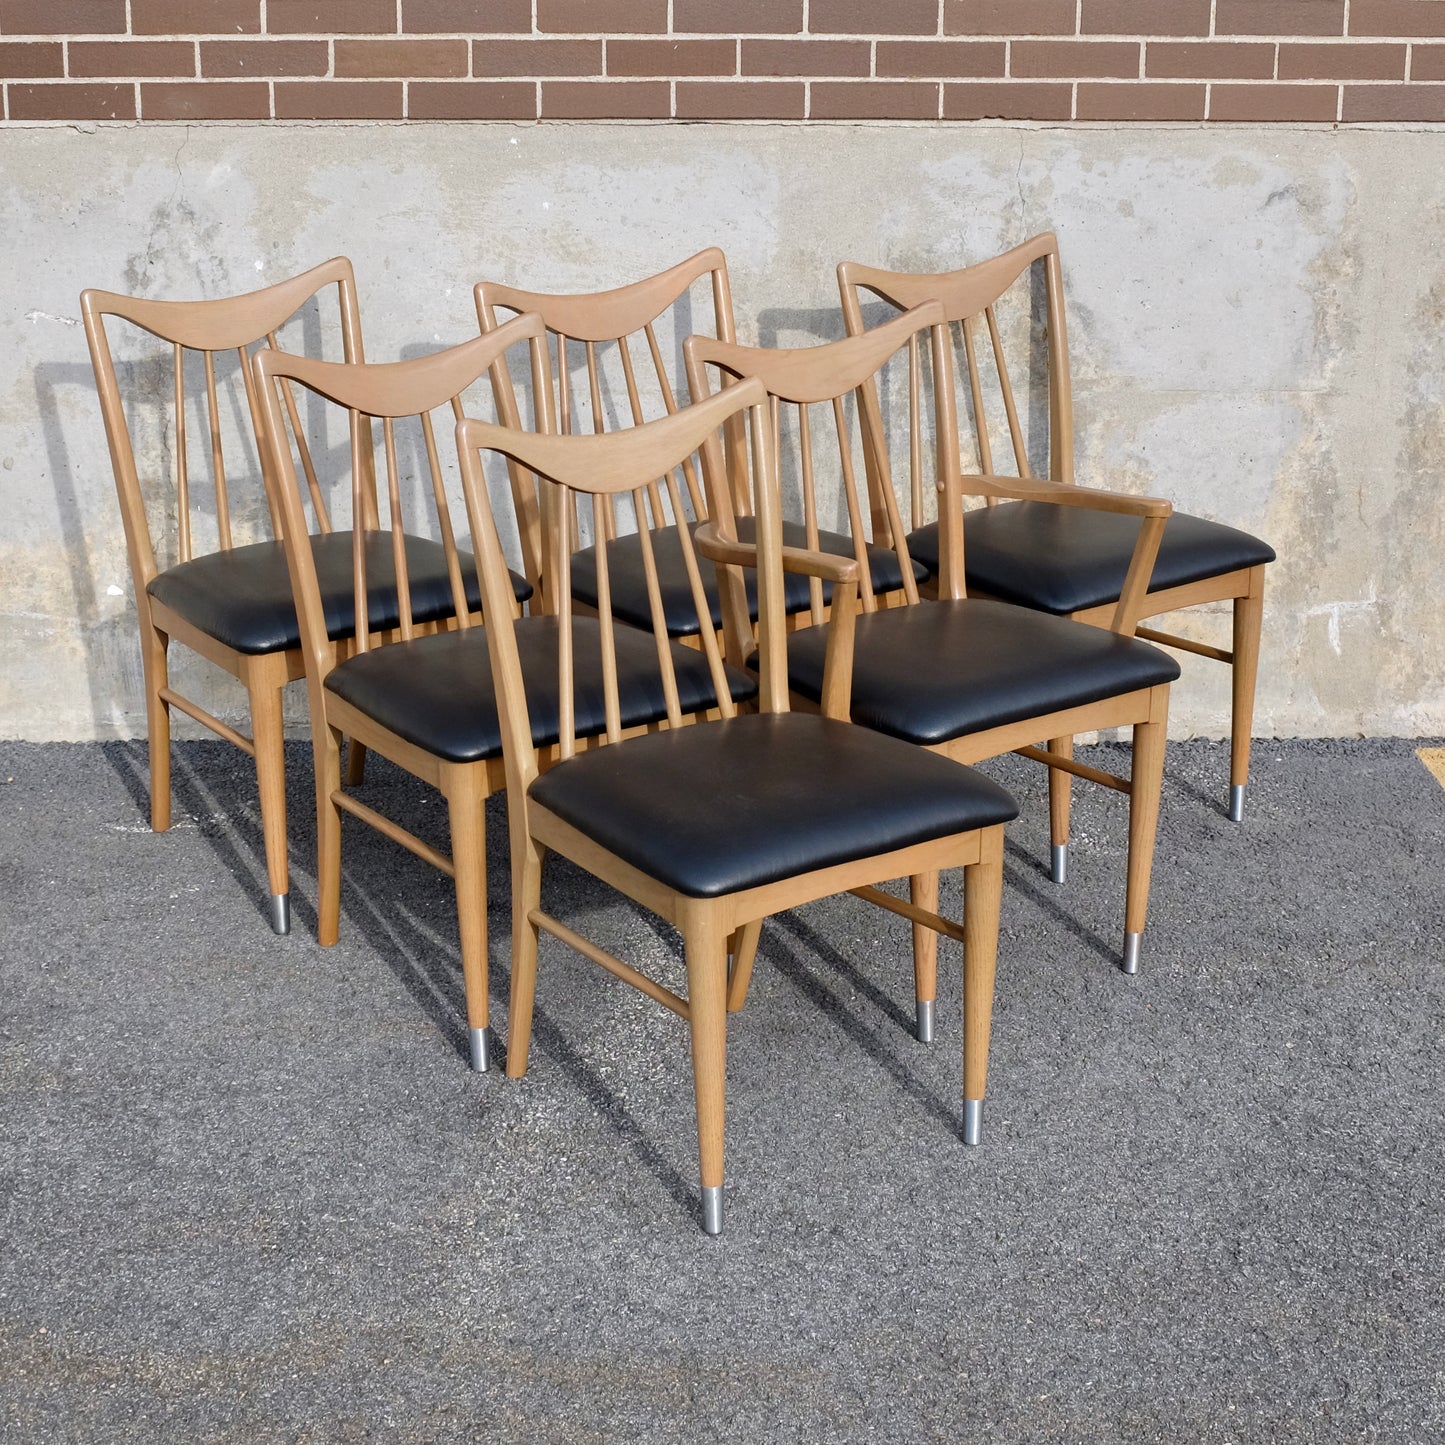 Keller Furniture "Valkerie" Oak Dining Chairs - Set of 6